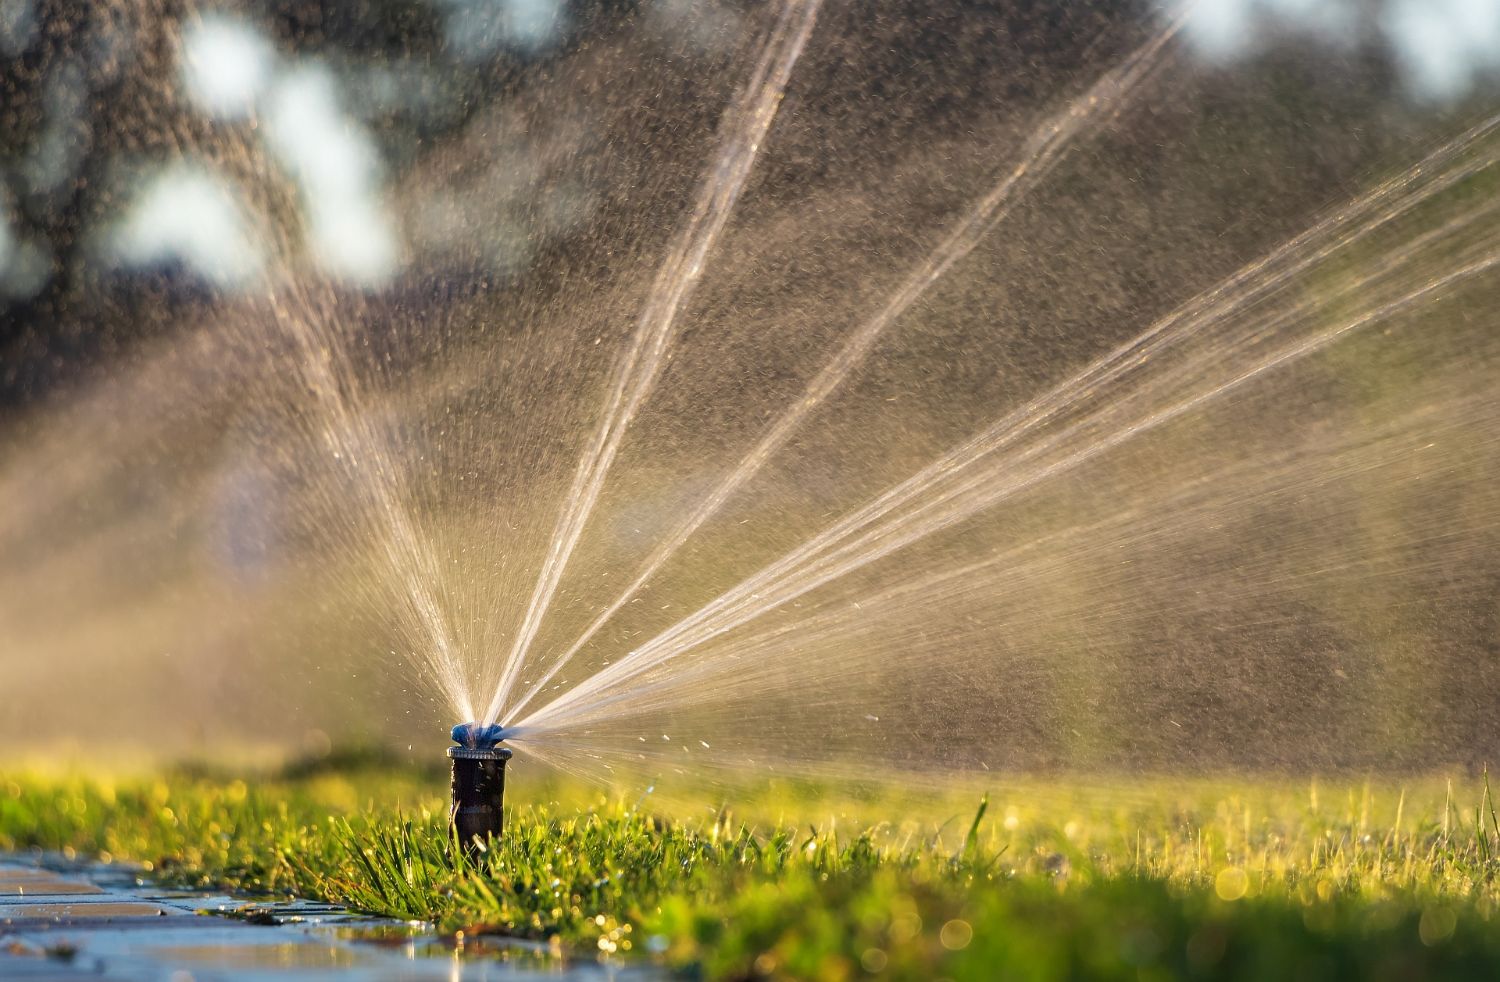 A sprinkler watering grass